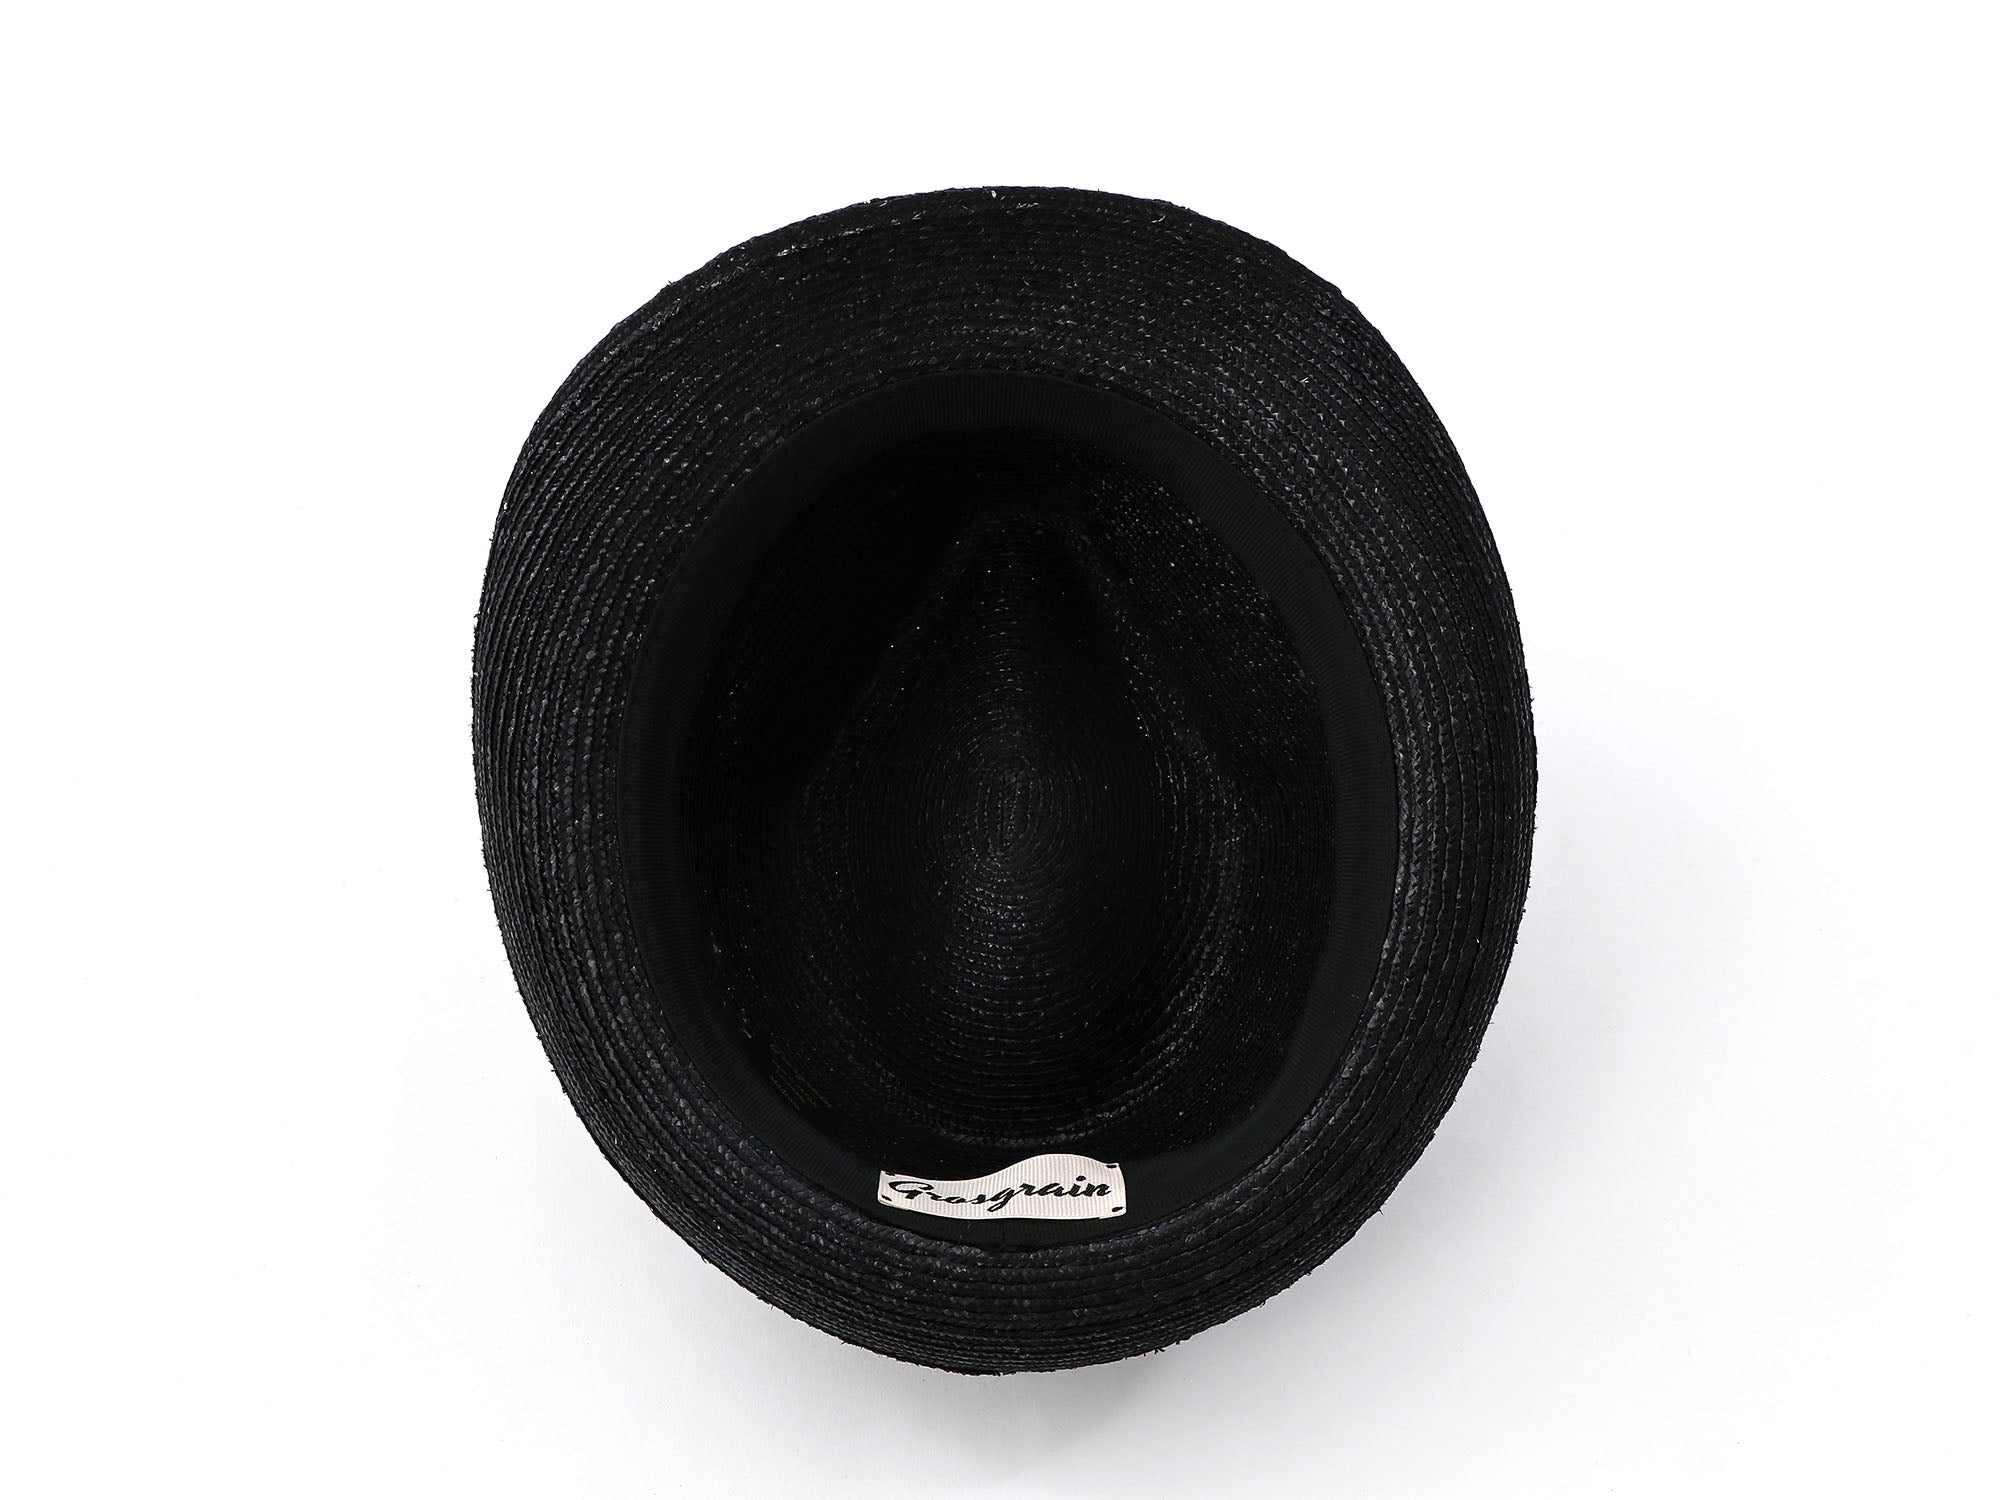 Black Straw Unisex Trilby Hat Marlowe